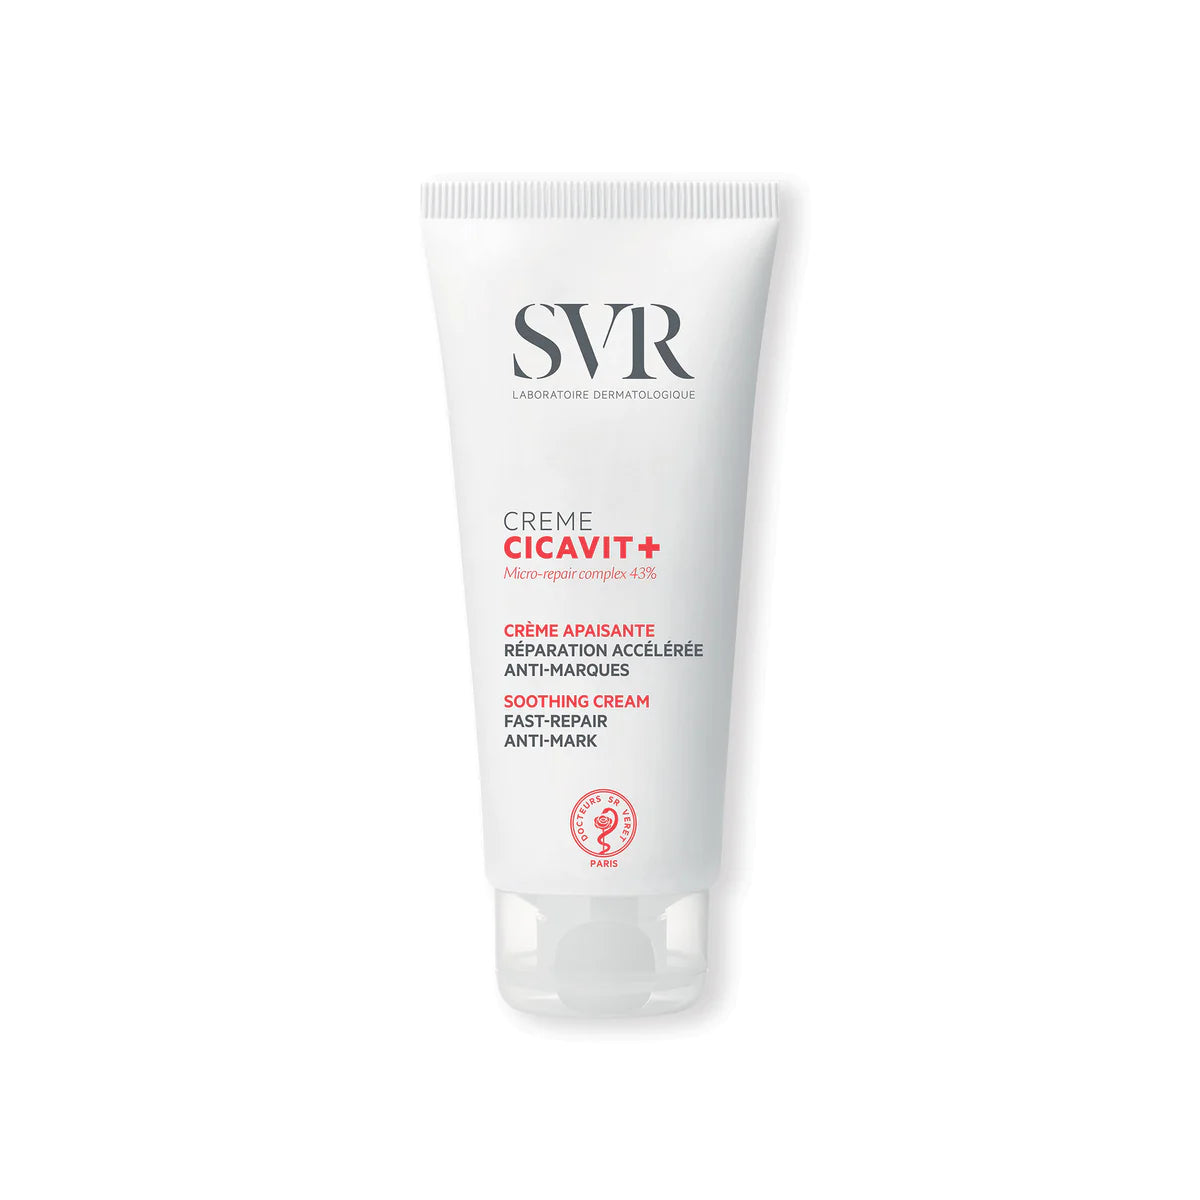 SVR Cicavit+ Soothing Cream Fast-Repair Anti-Mark 100ml - FrenchSkinLab